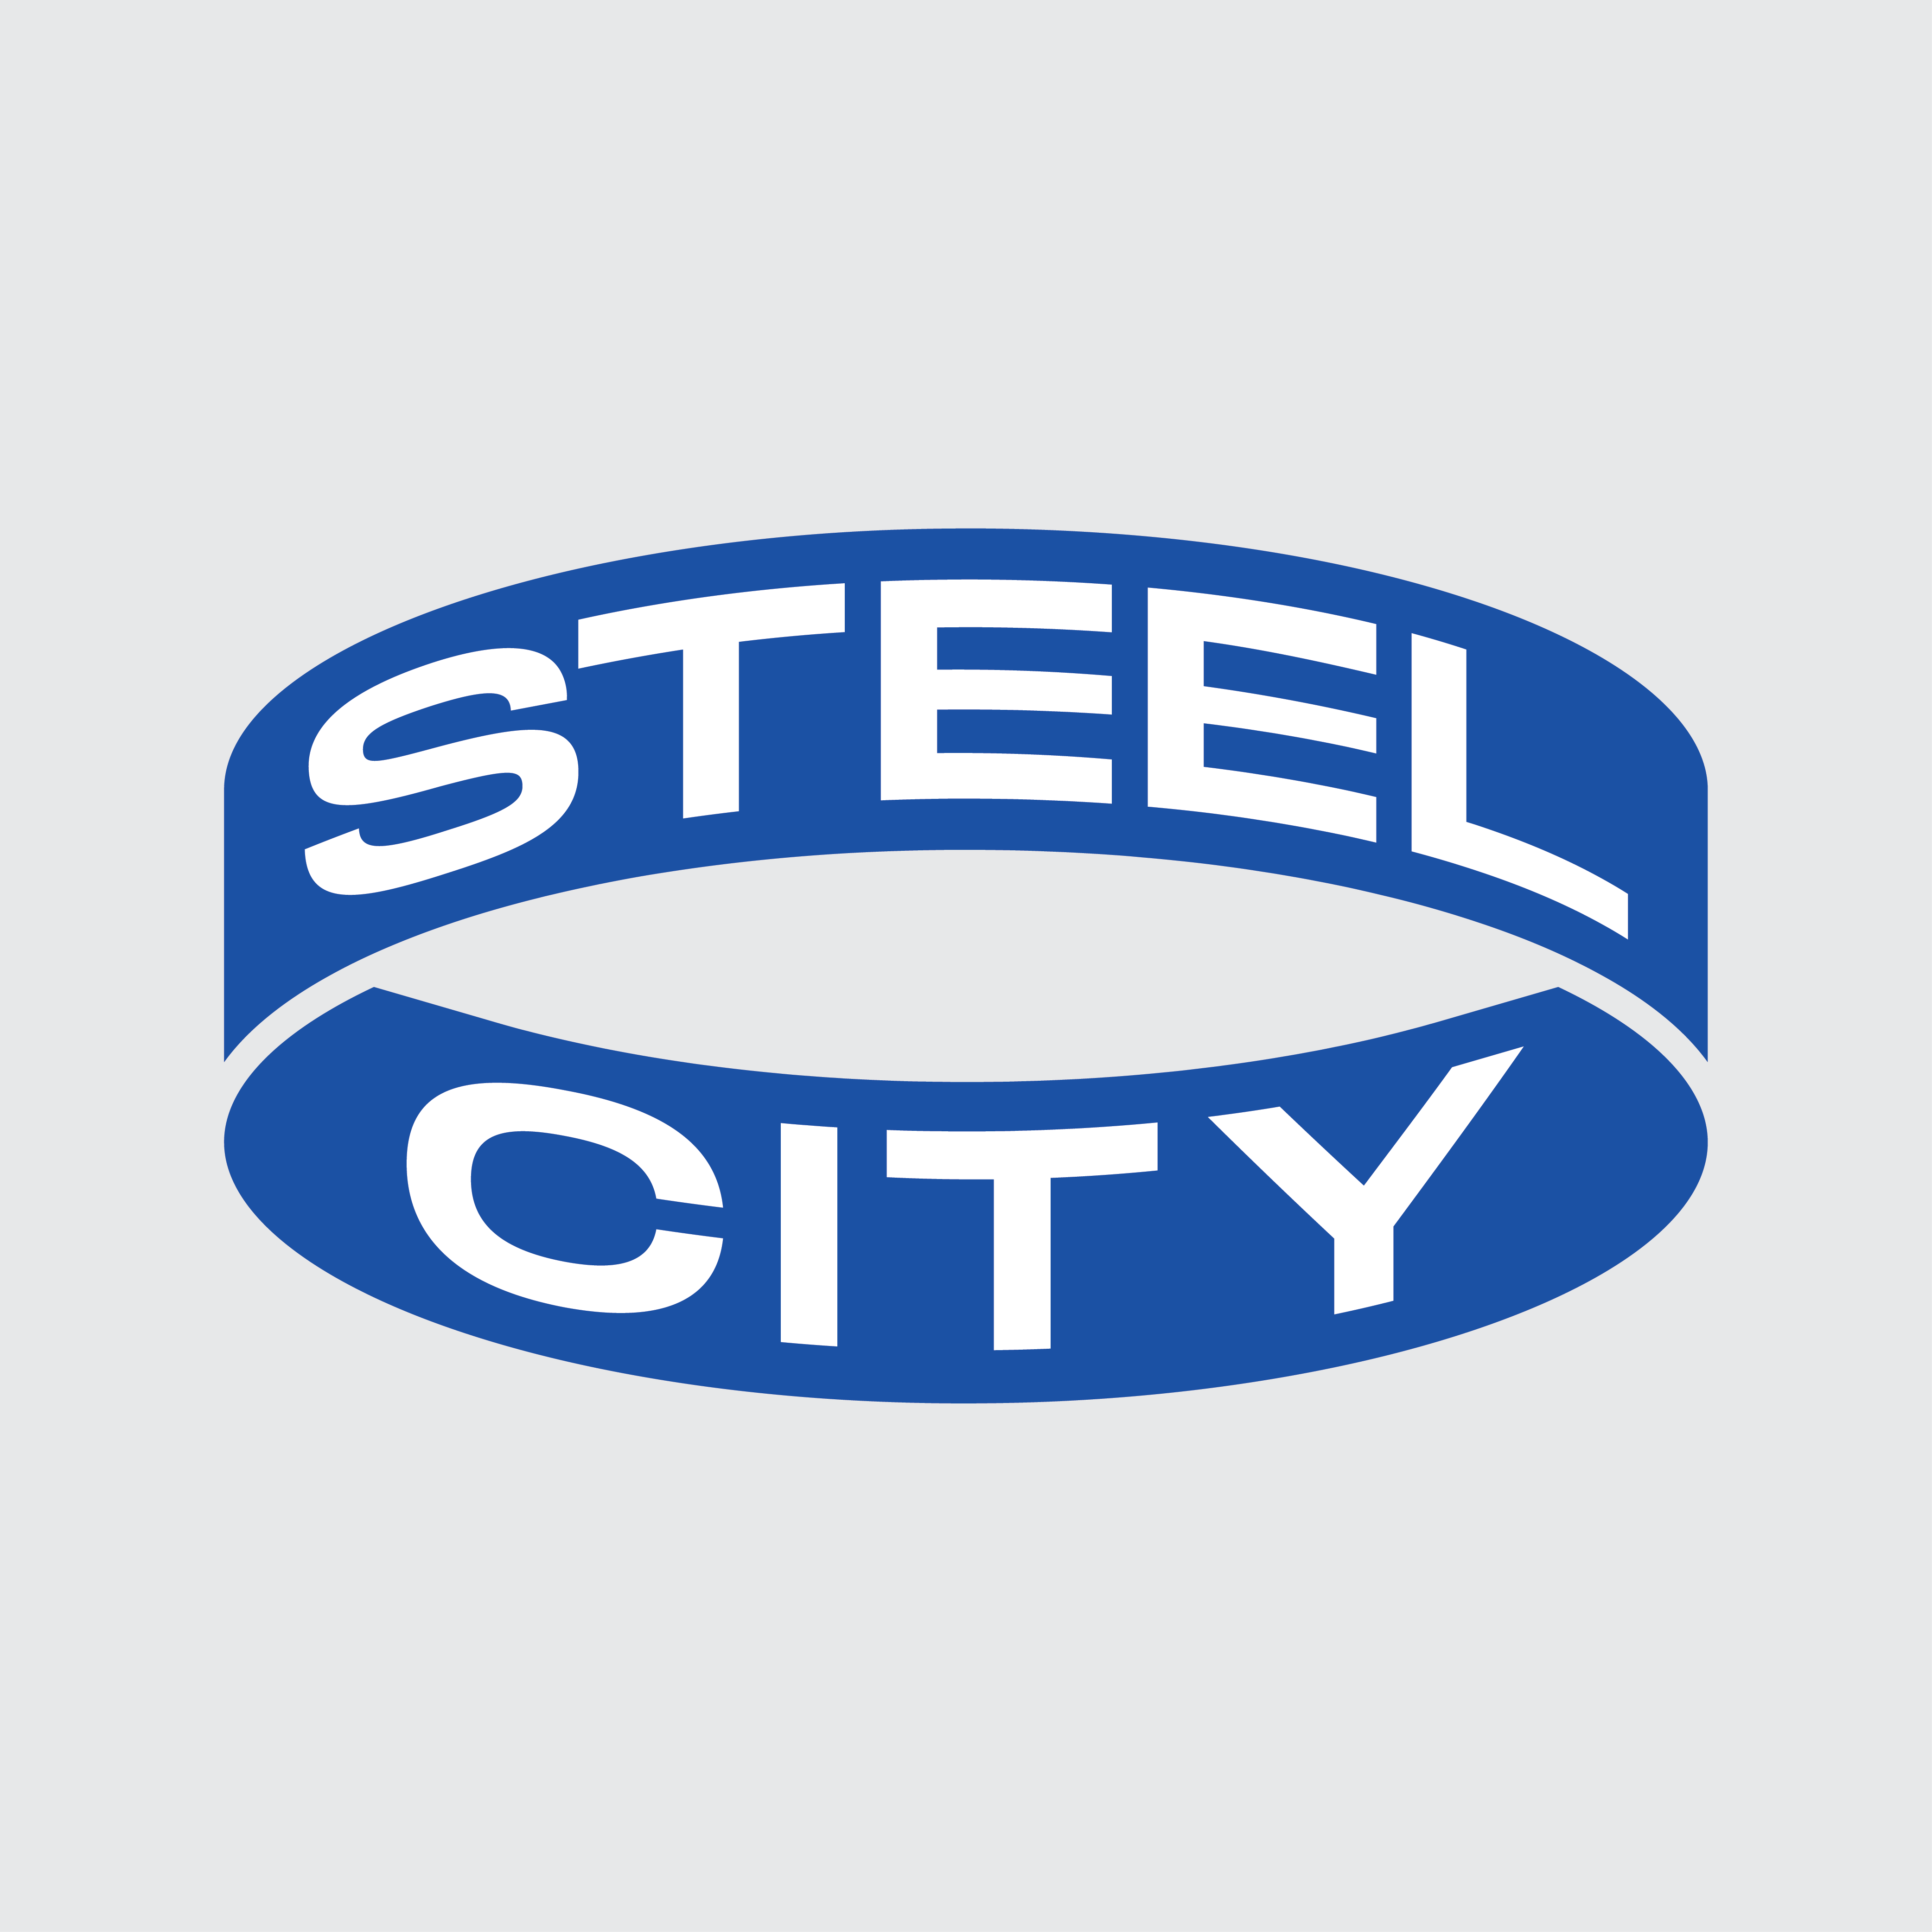 Steel City Beer Company